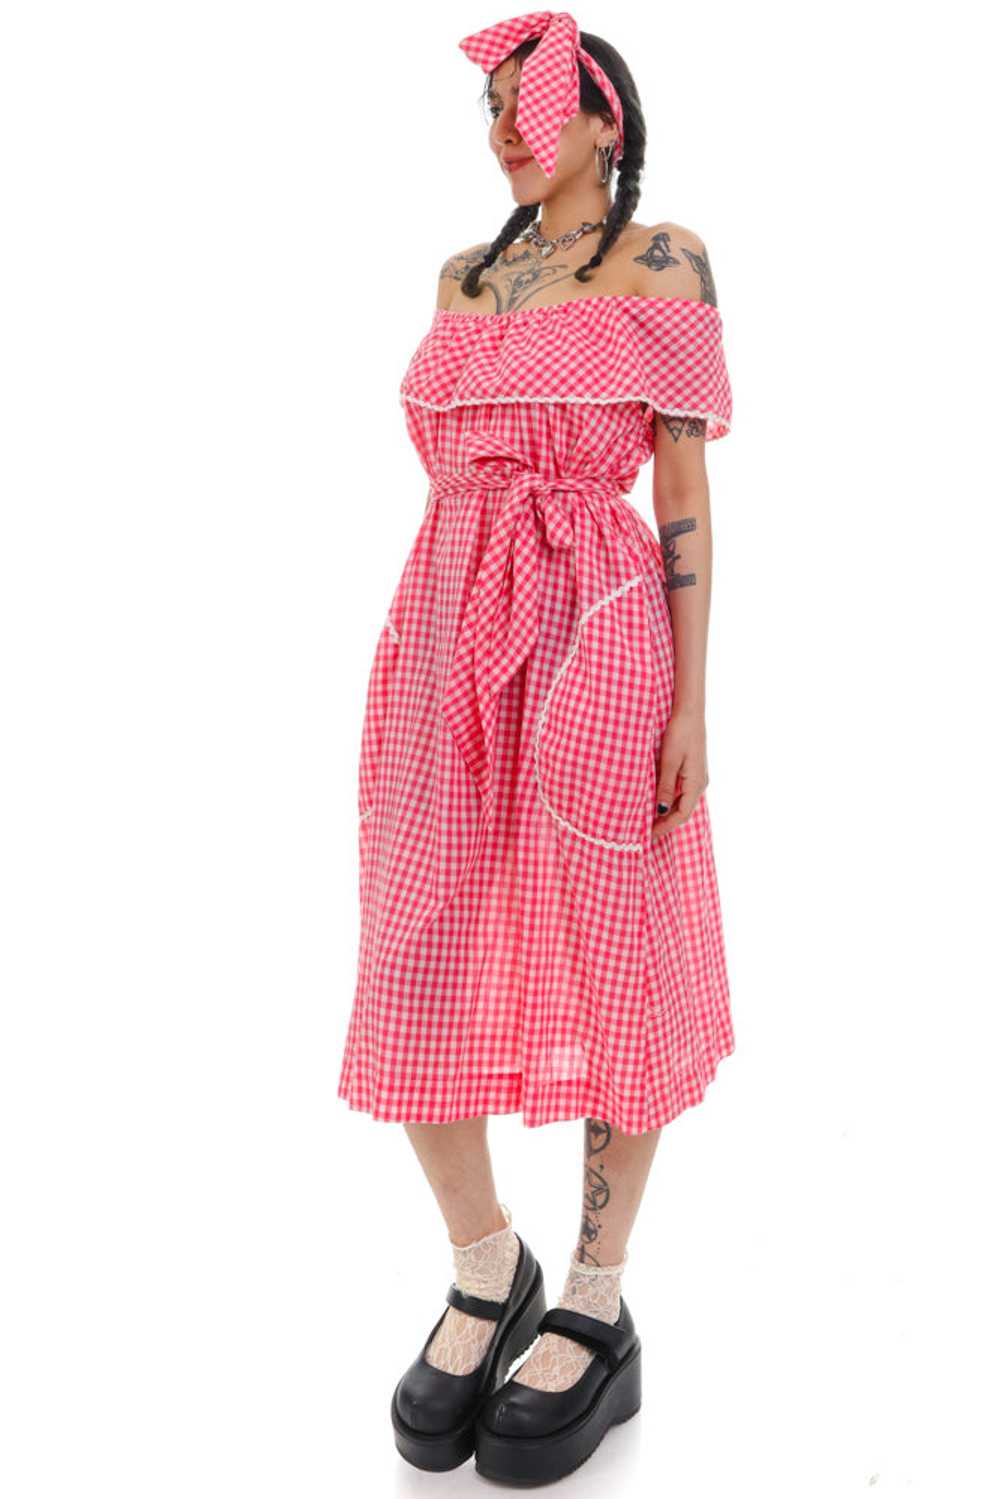 Vintage 70's Pretty In Pink Gingham Dress - OSFM - image 3